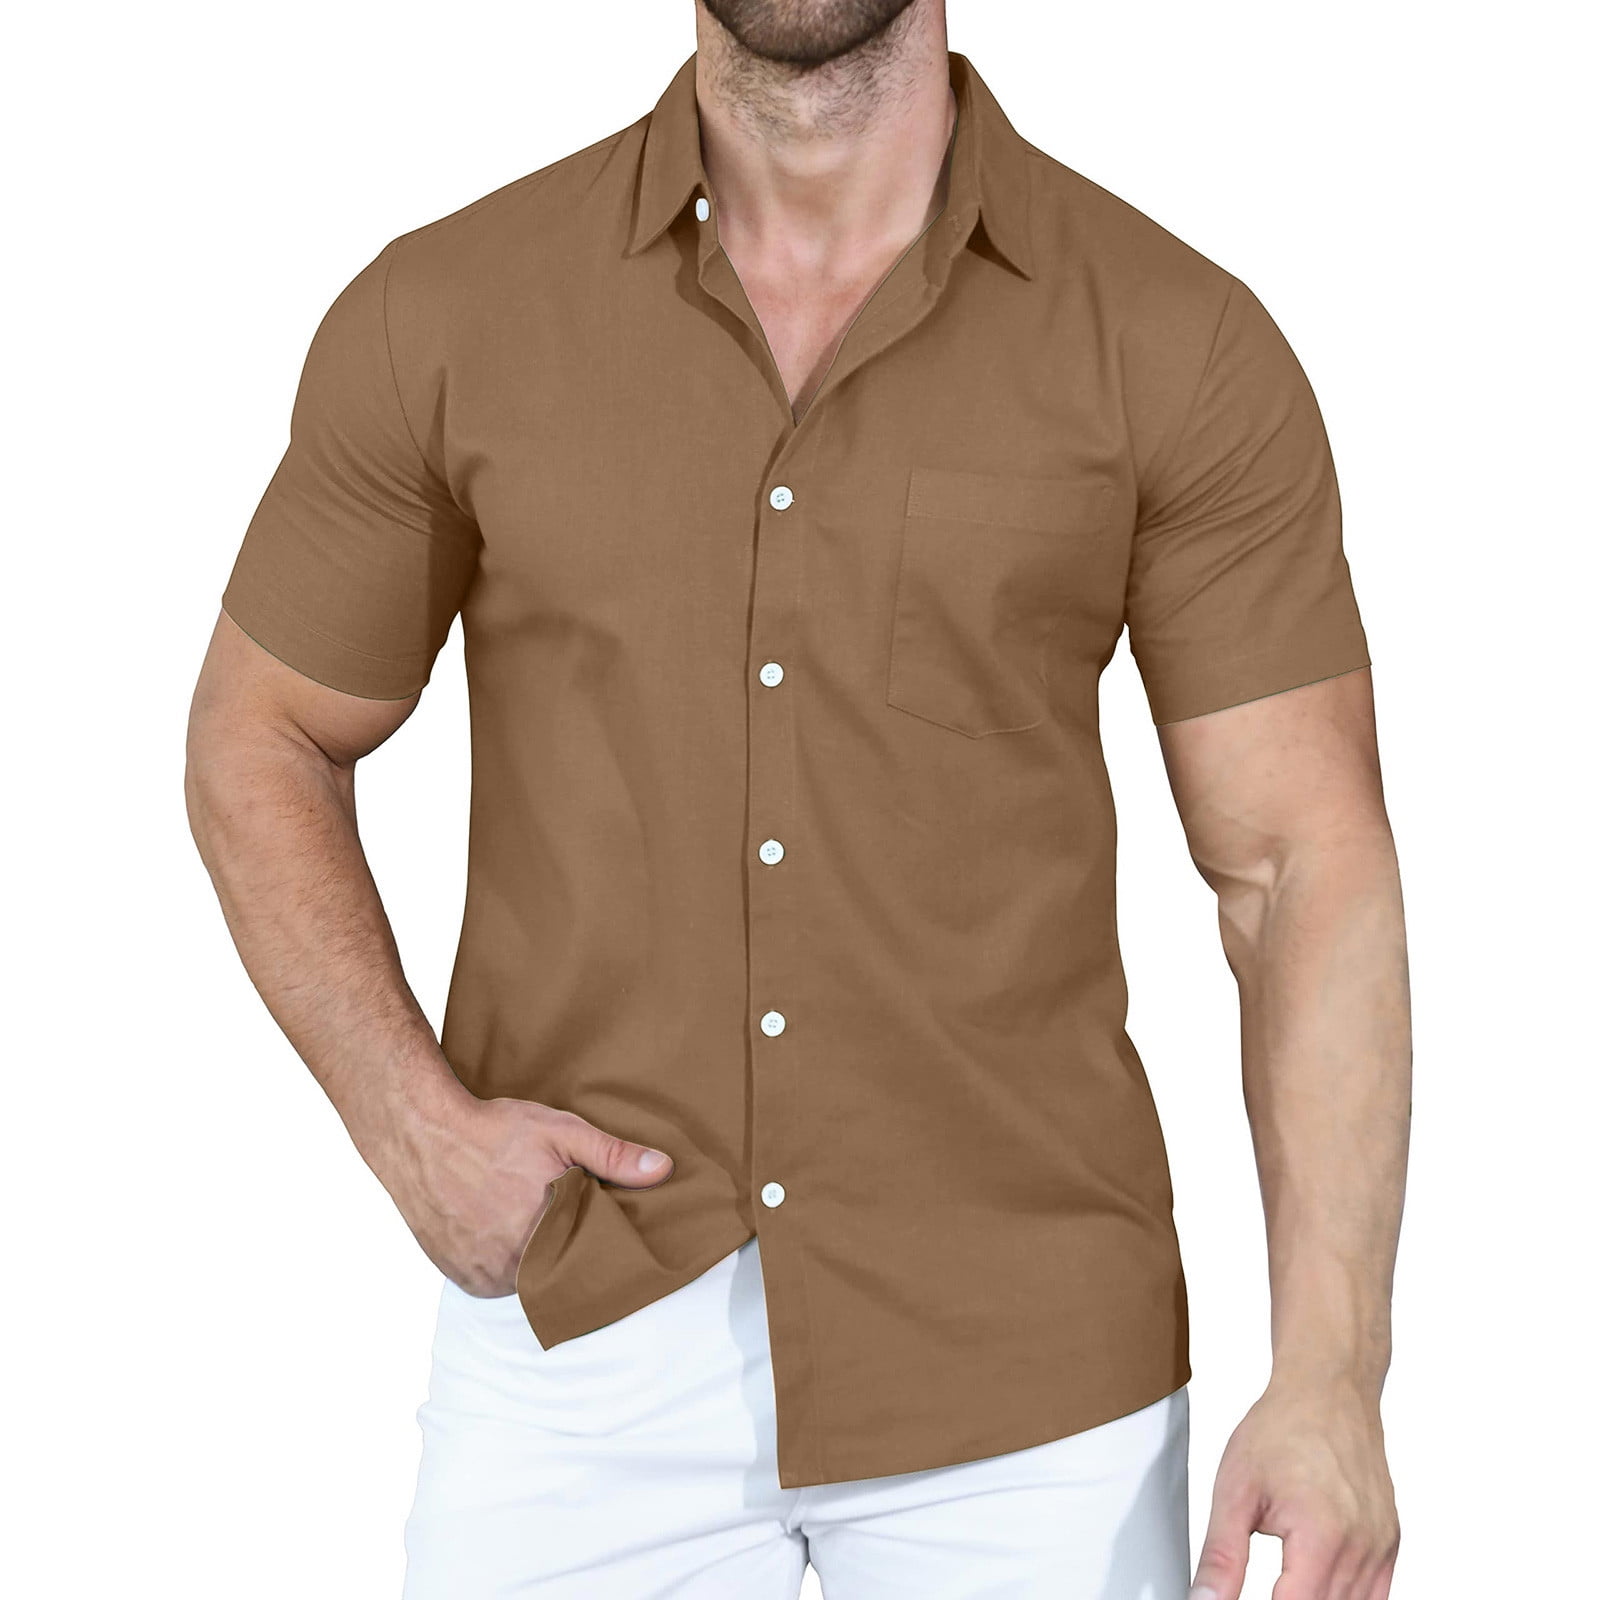 YYDGH Mens Dress Shirts Short Sleeve Button Up Shirts Business Casual  Button Down Shirt Brown XXL